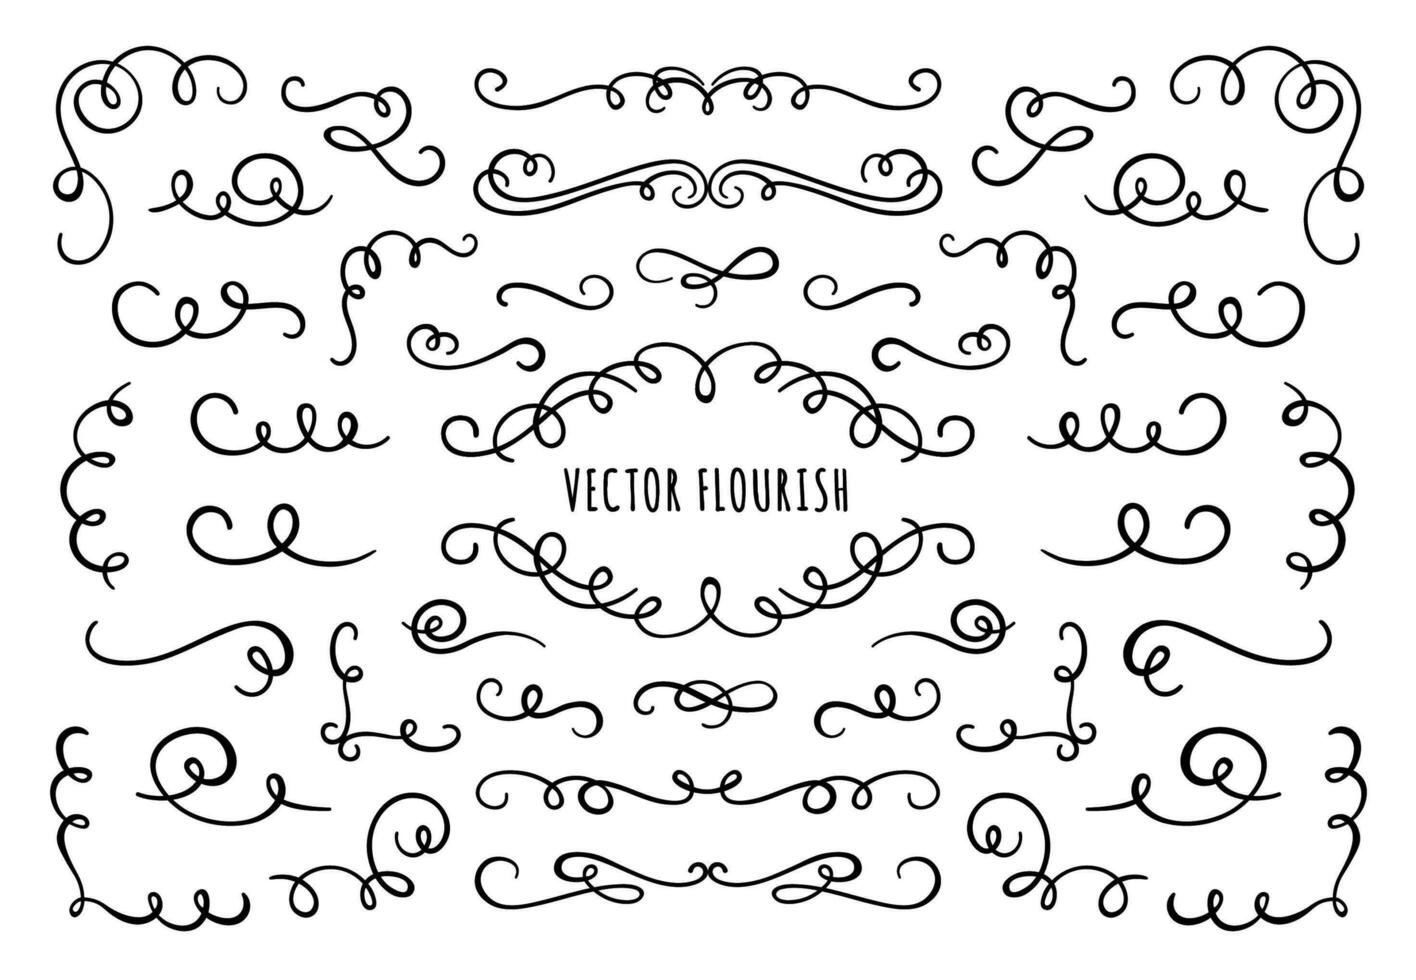 Flourish frame, corners and dividers. Decorative flourishes corner, calligraphic divider and ornate scroll swirls vector set